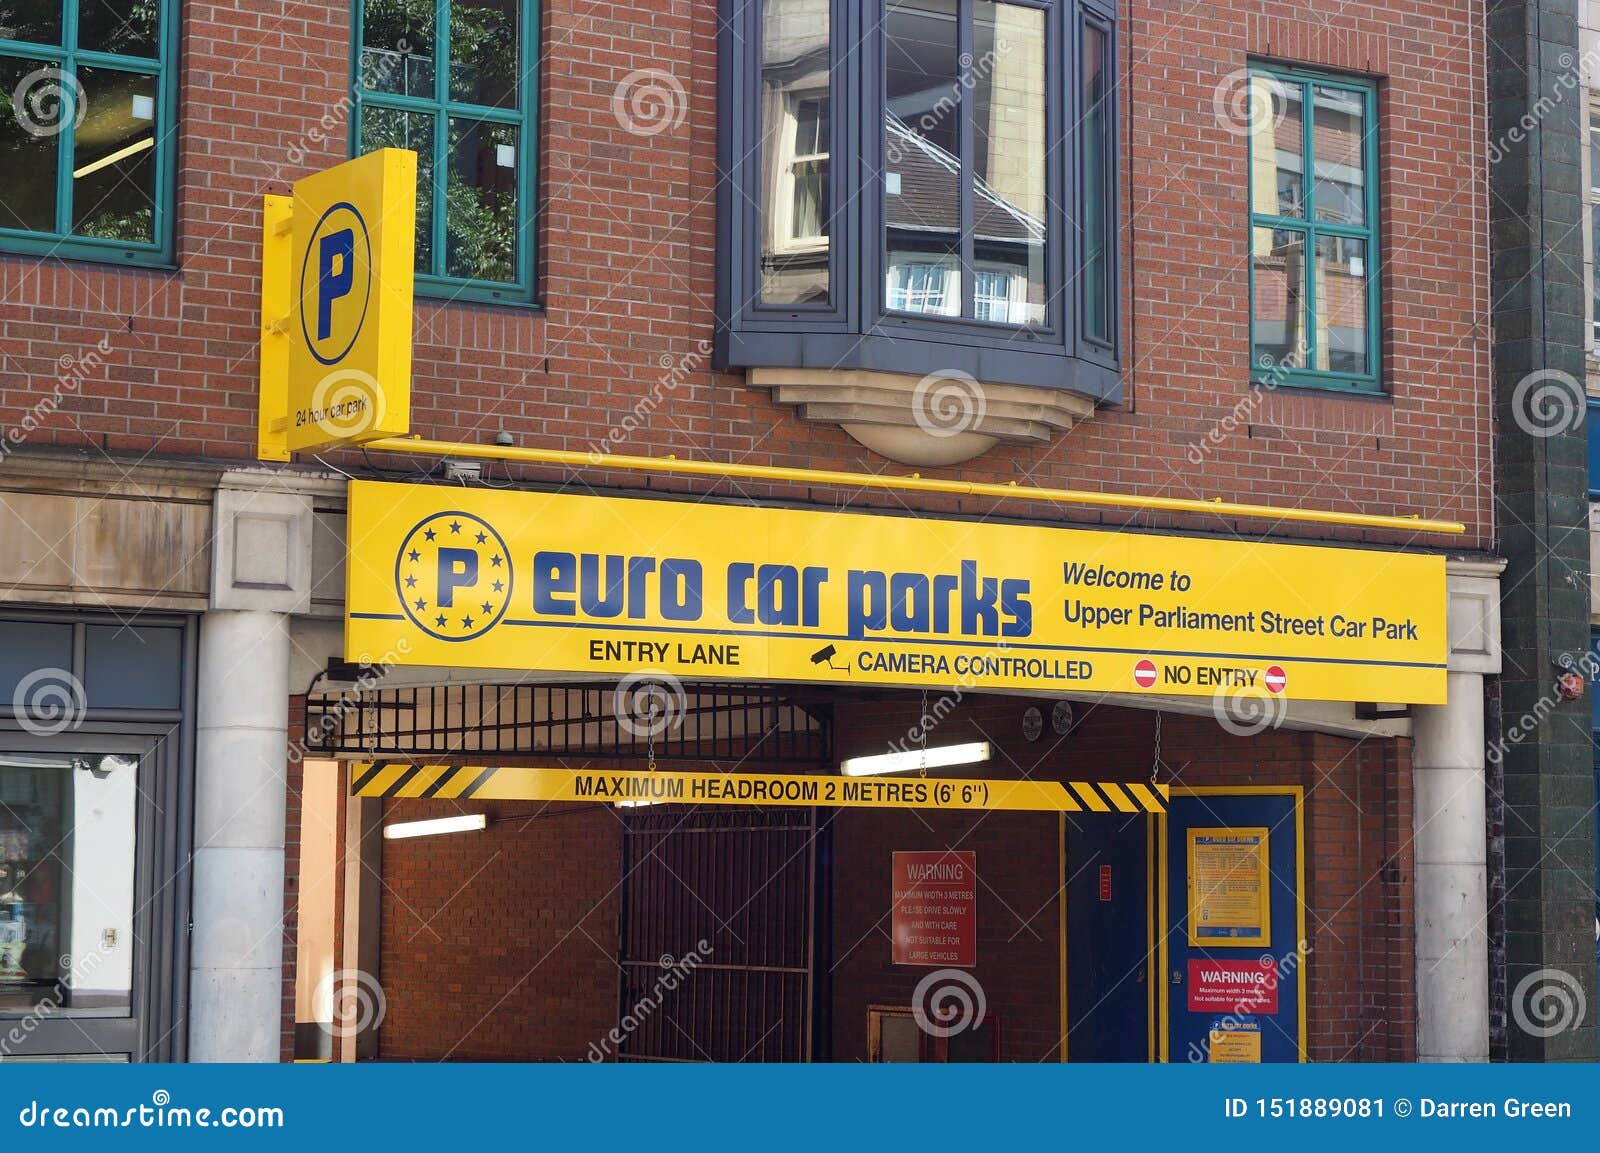 Euro car parks jobs manchester